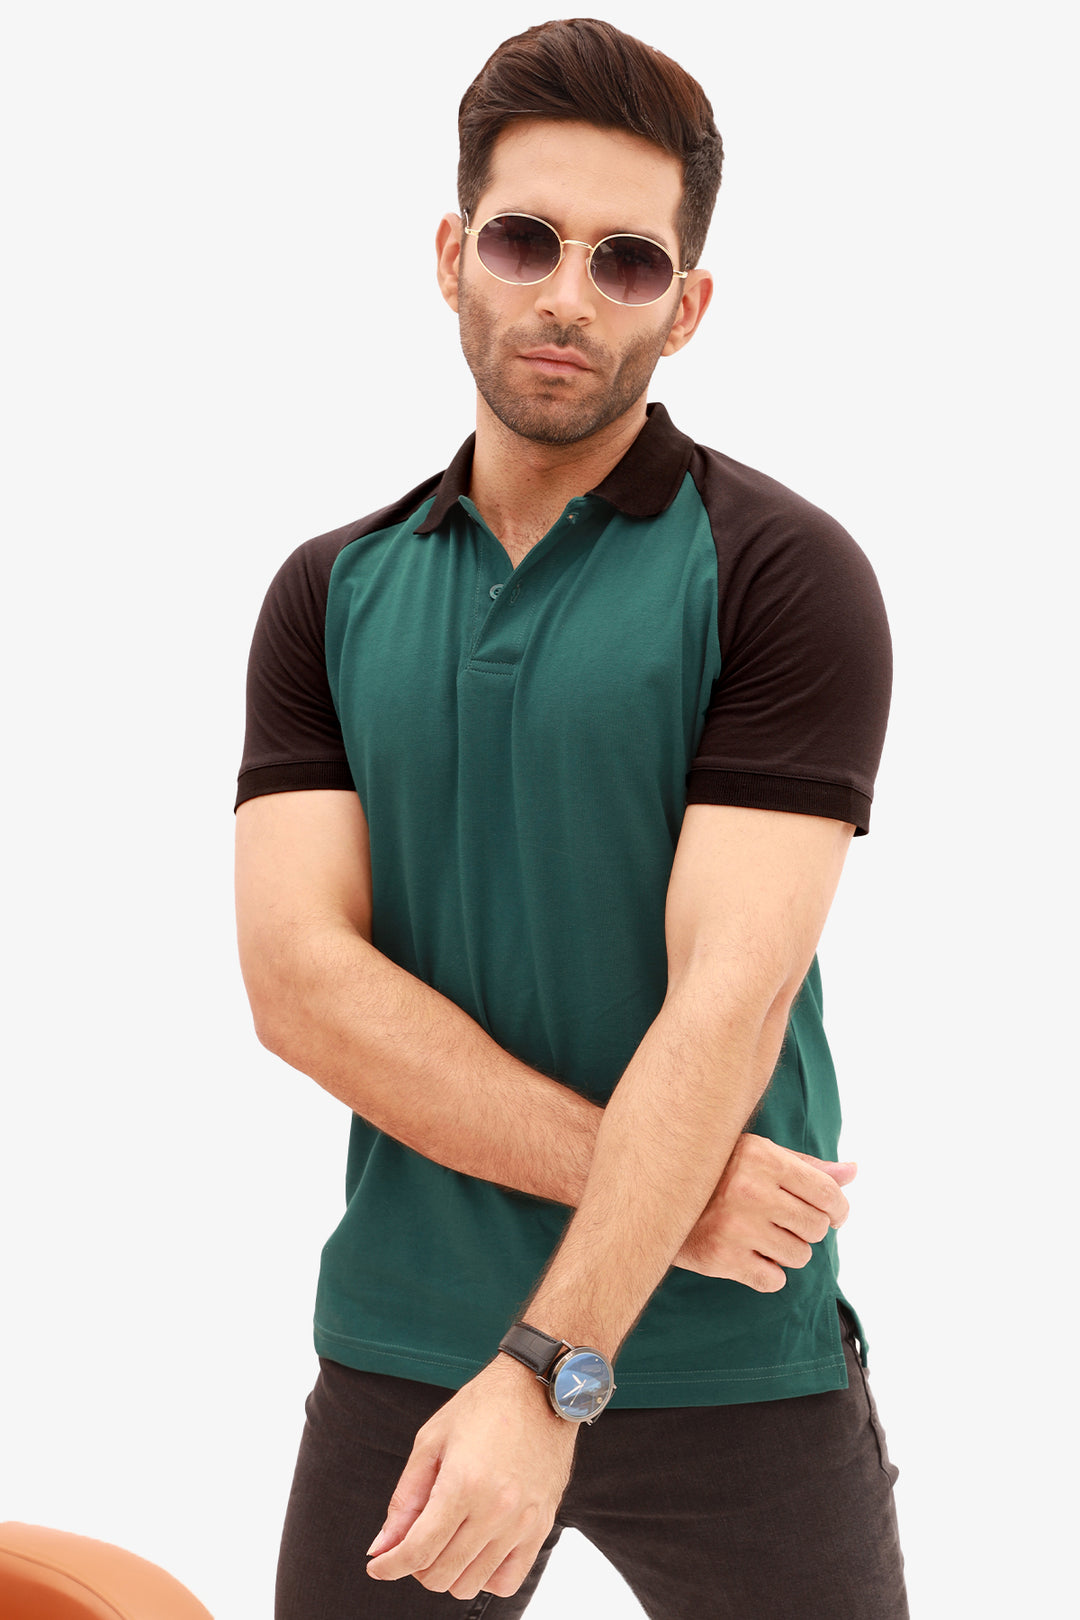 Teal & Black Raglan Polo Shirt - S22 - MP0117R